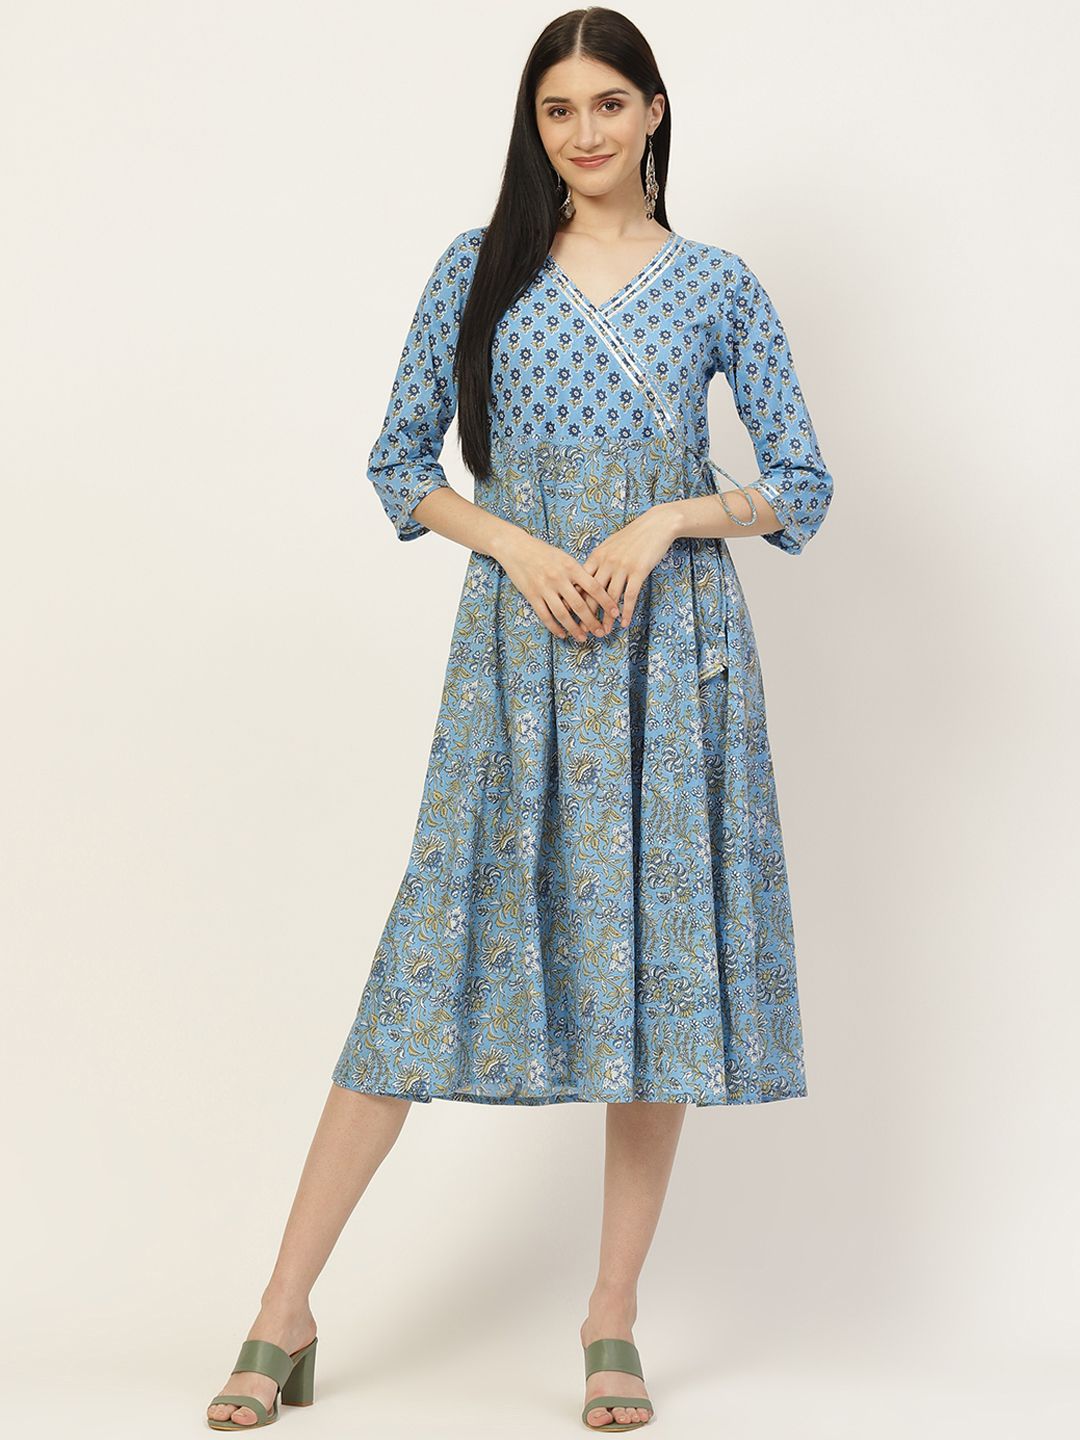 Maaesa Blue & Green Floral Printed Ethnic Midi Wrap Dress Price in India